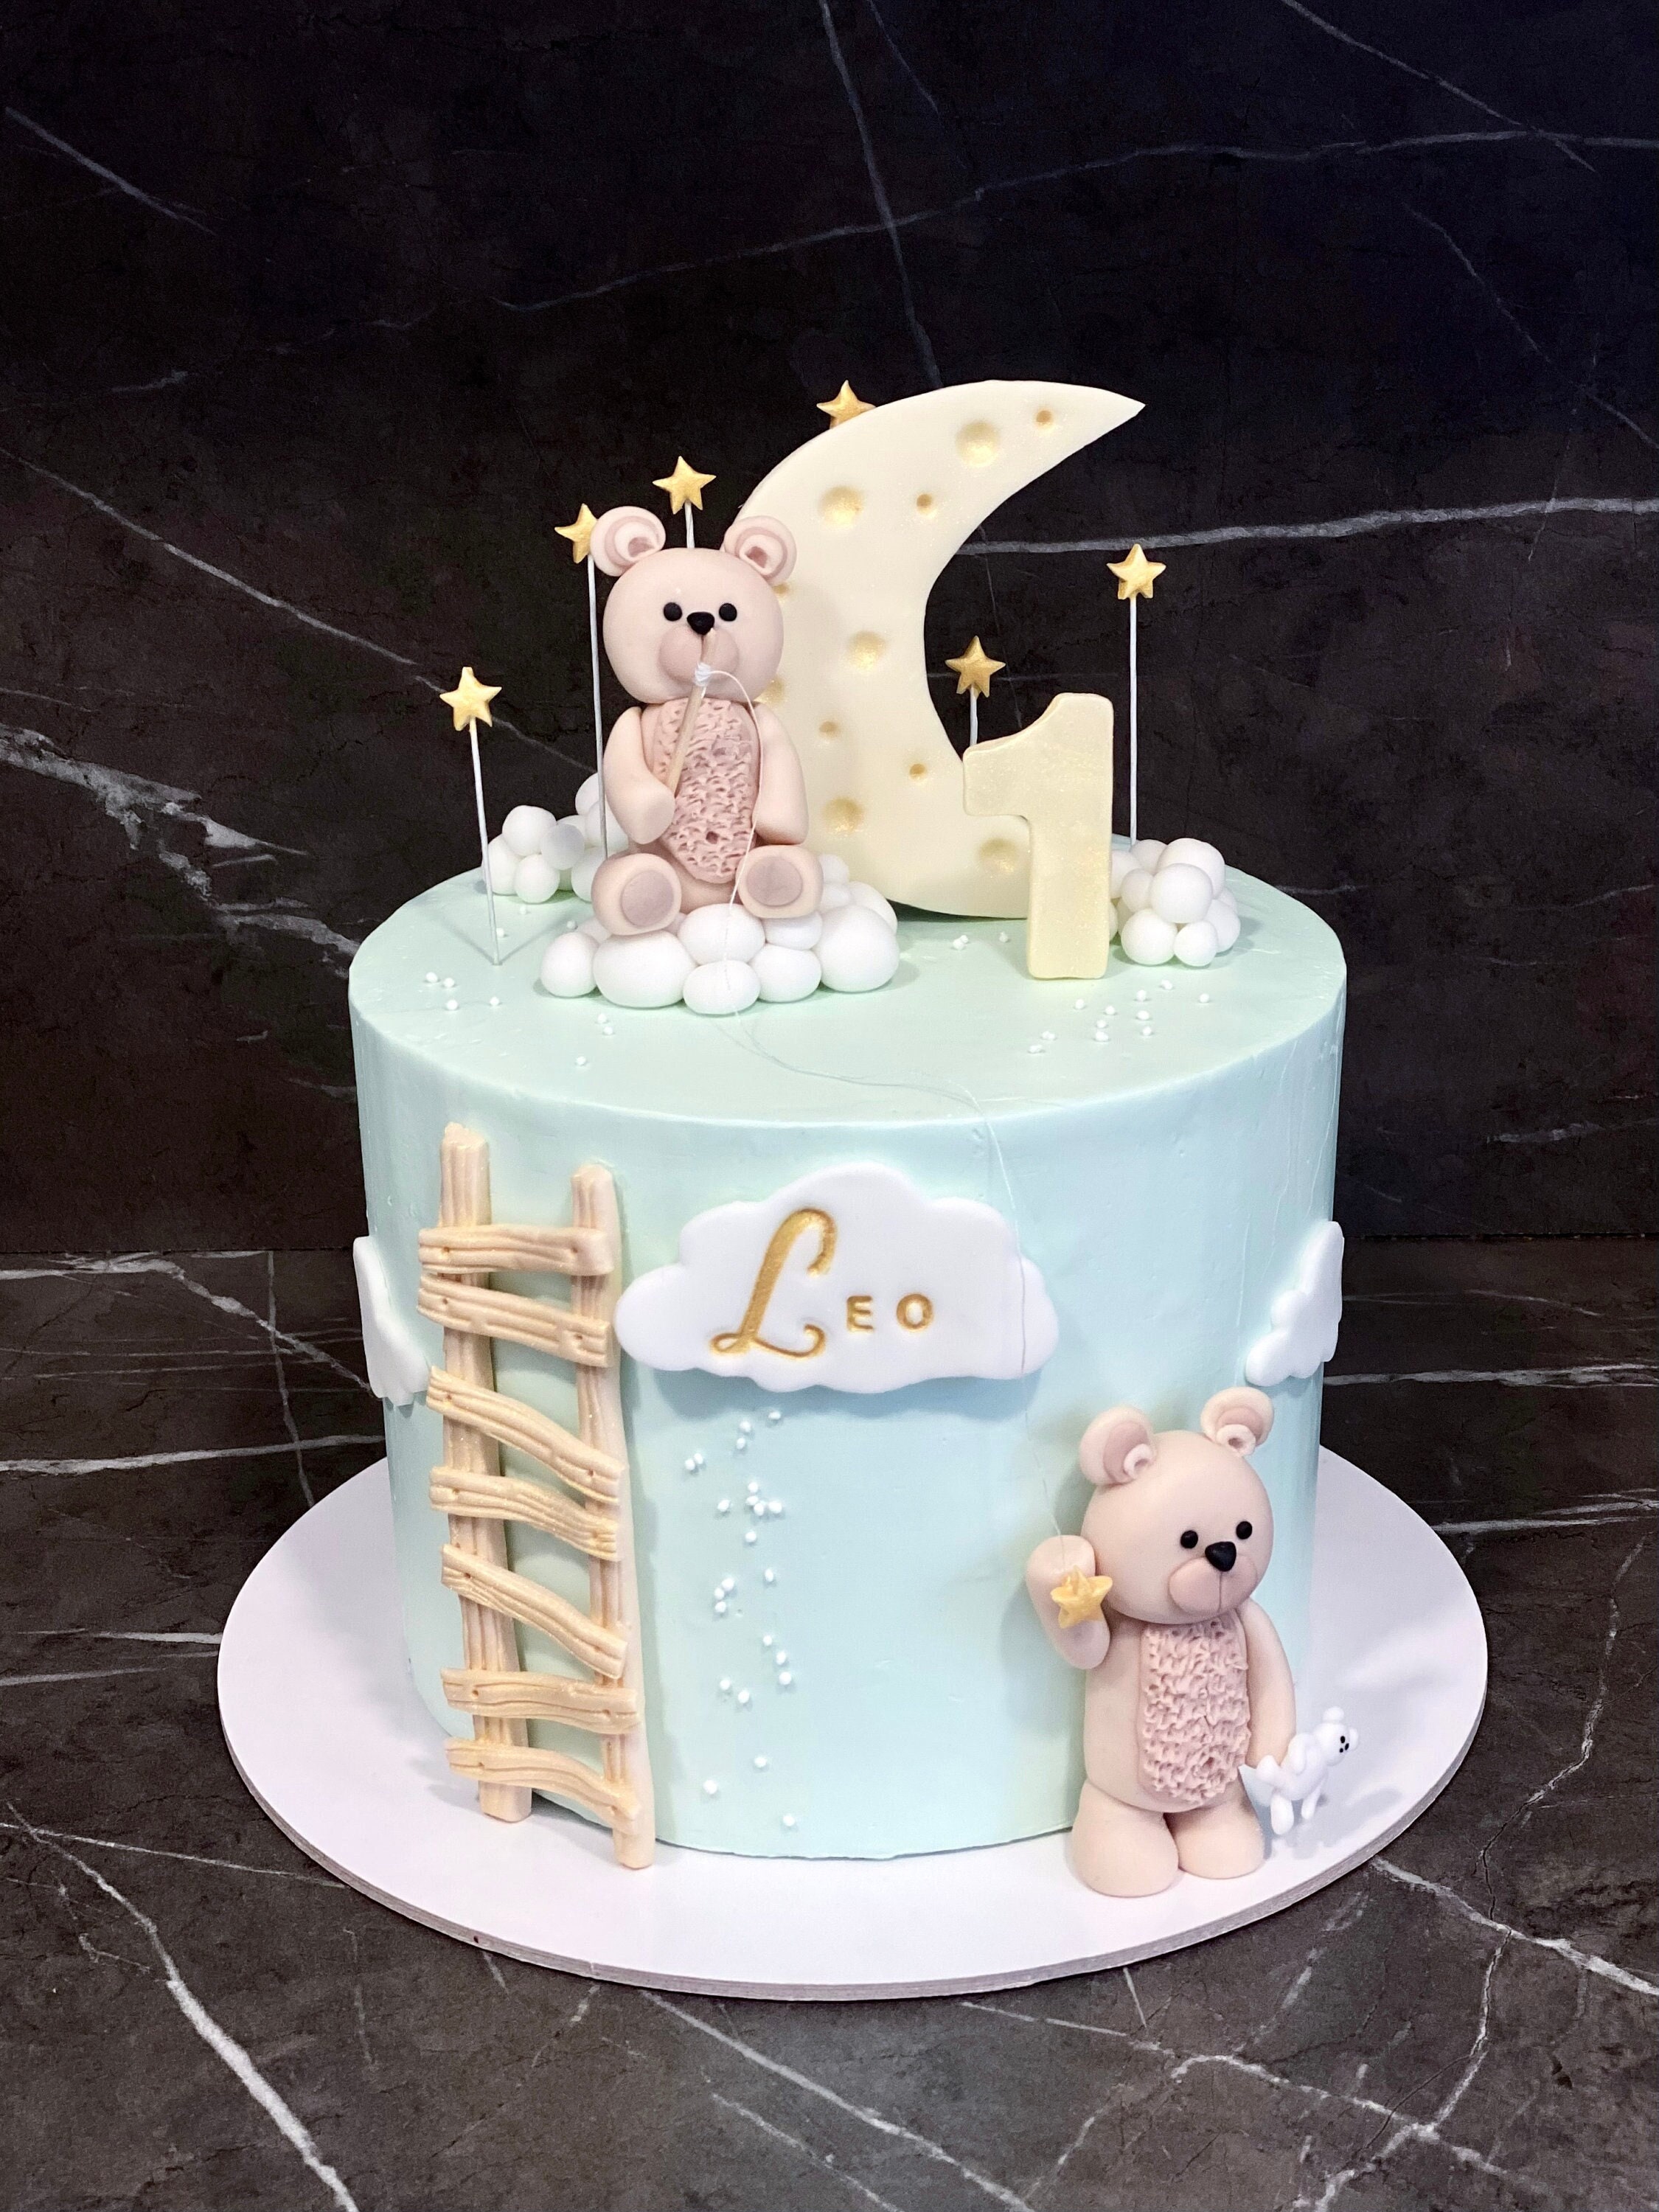 Fishing Bear Birthday Cake Topper, Personalised 